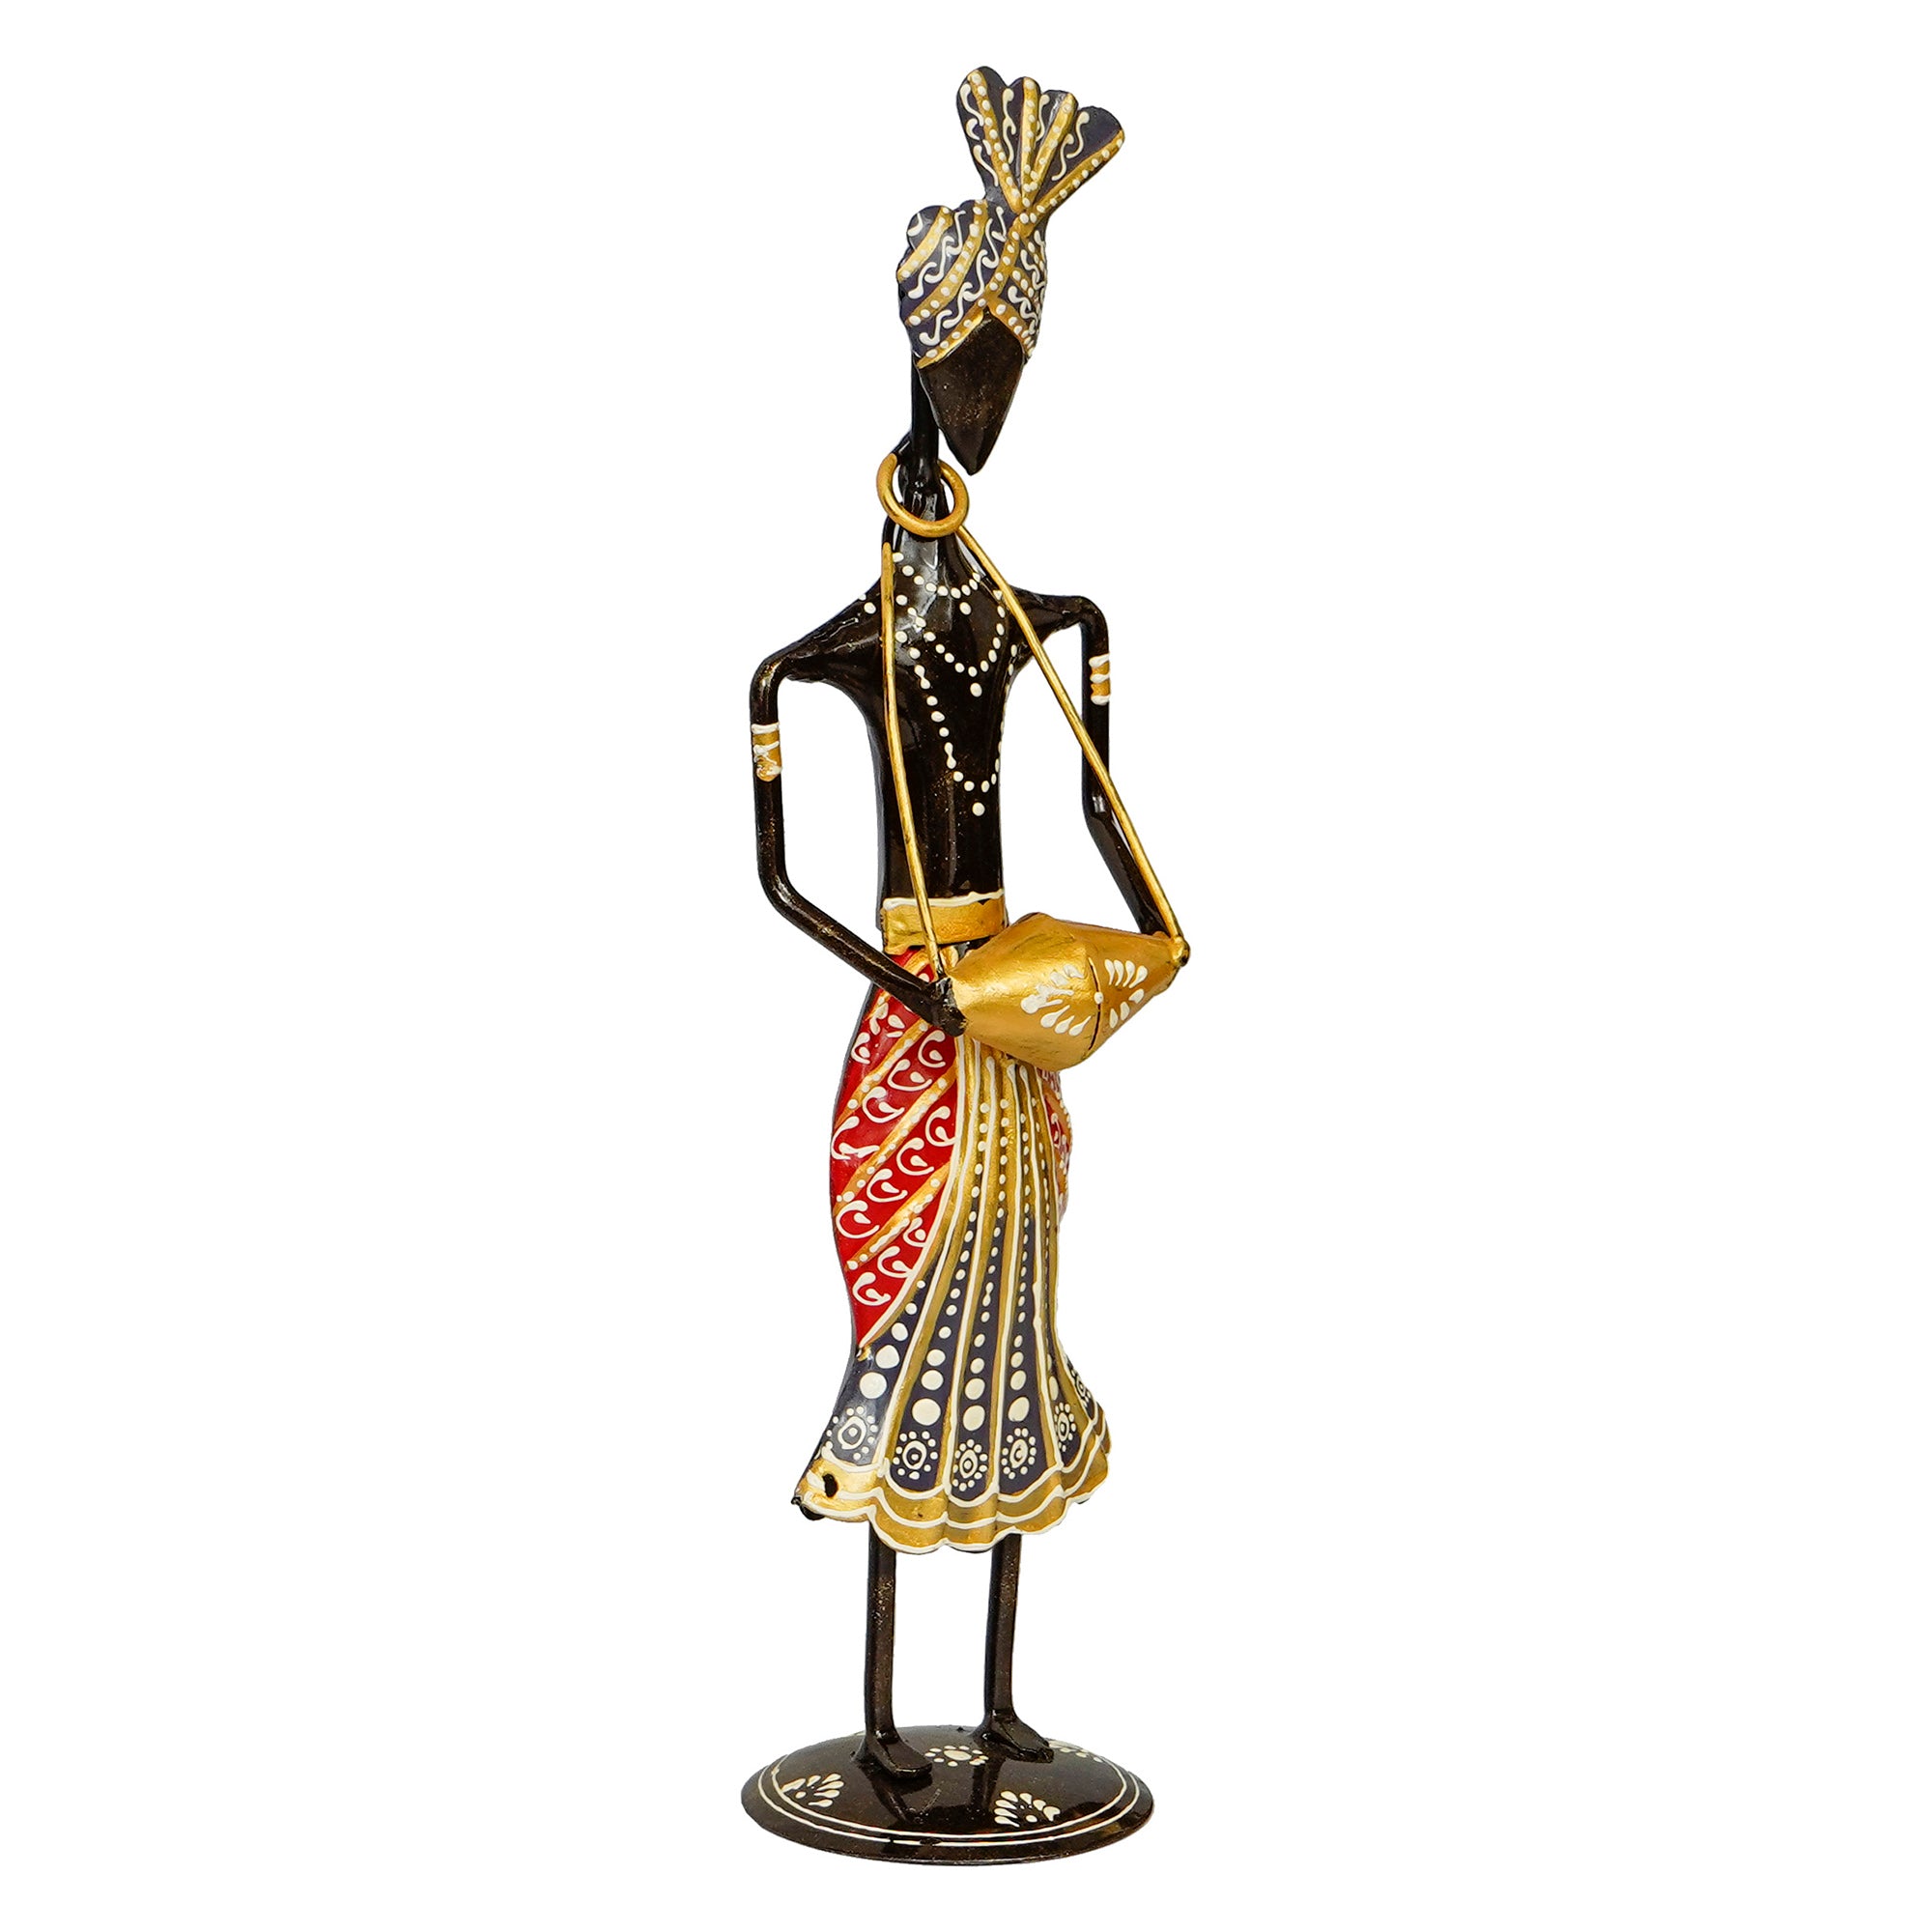 Iron Tribal Man Figurine Playing Banjo Musical Instrument Decorative Showpiece (Black, Green and Orange) 5